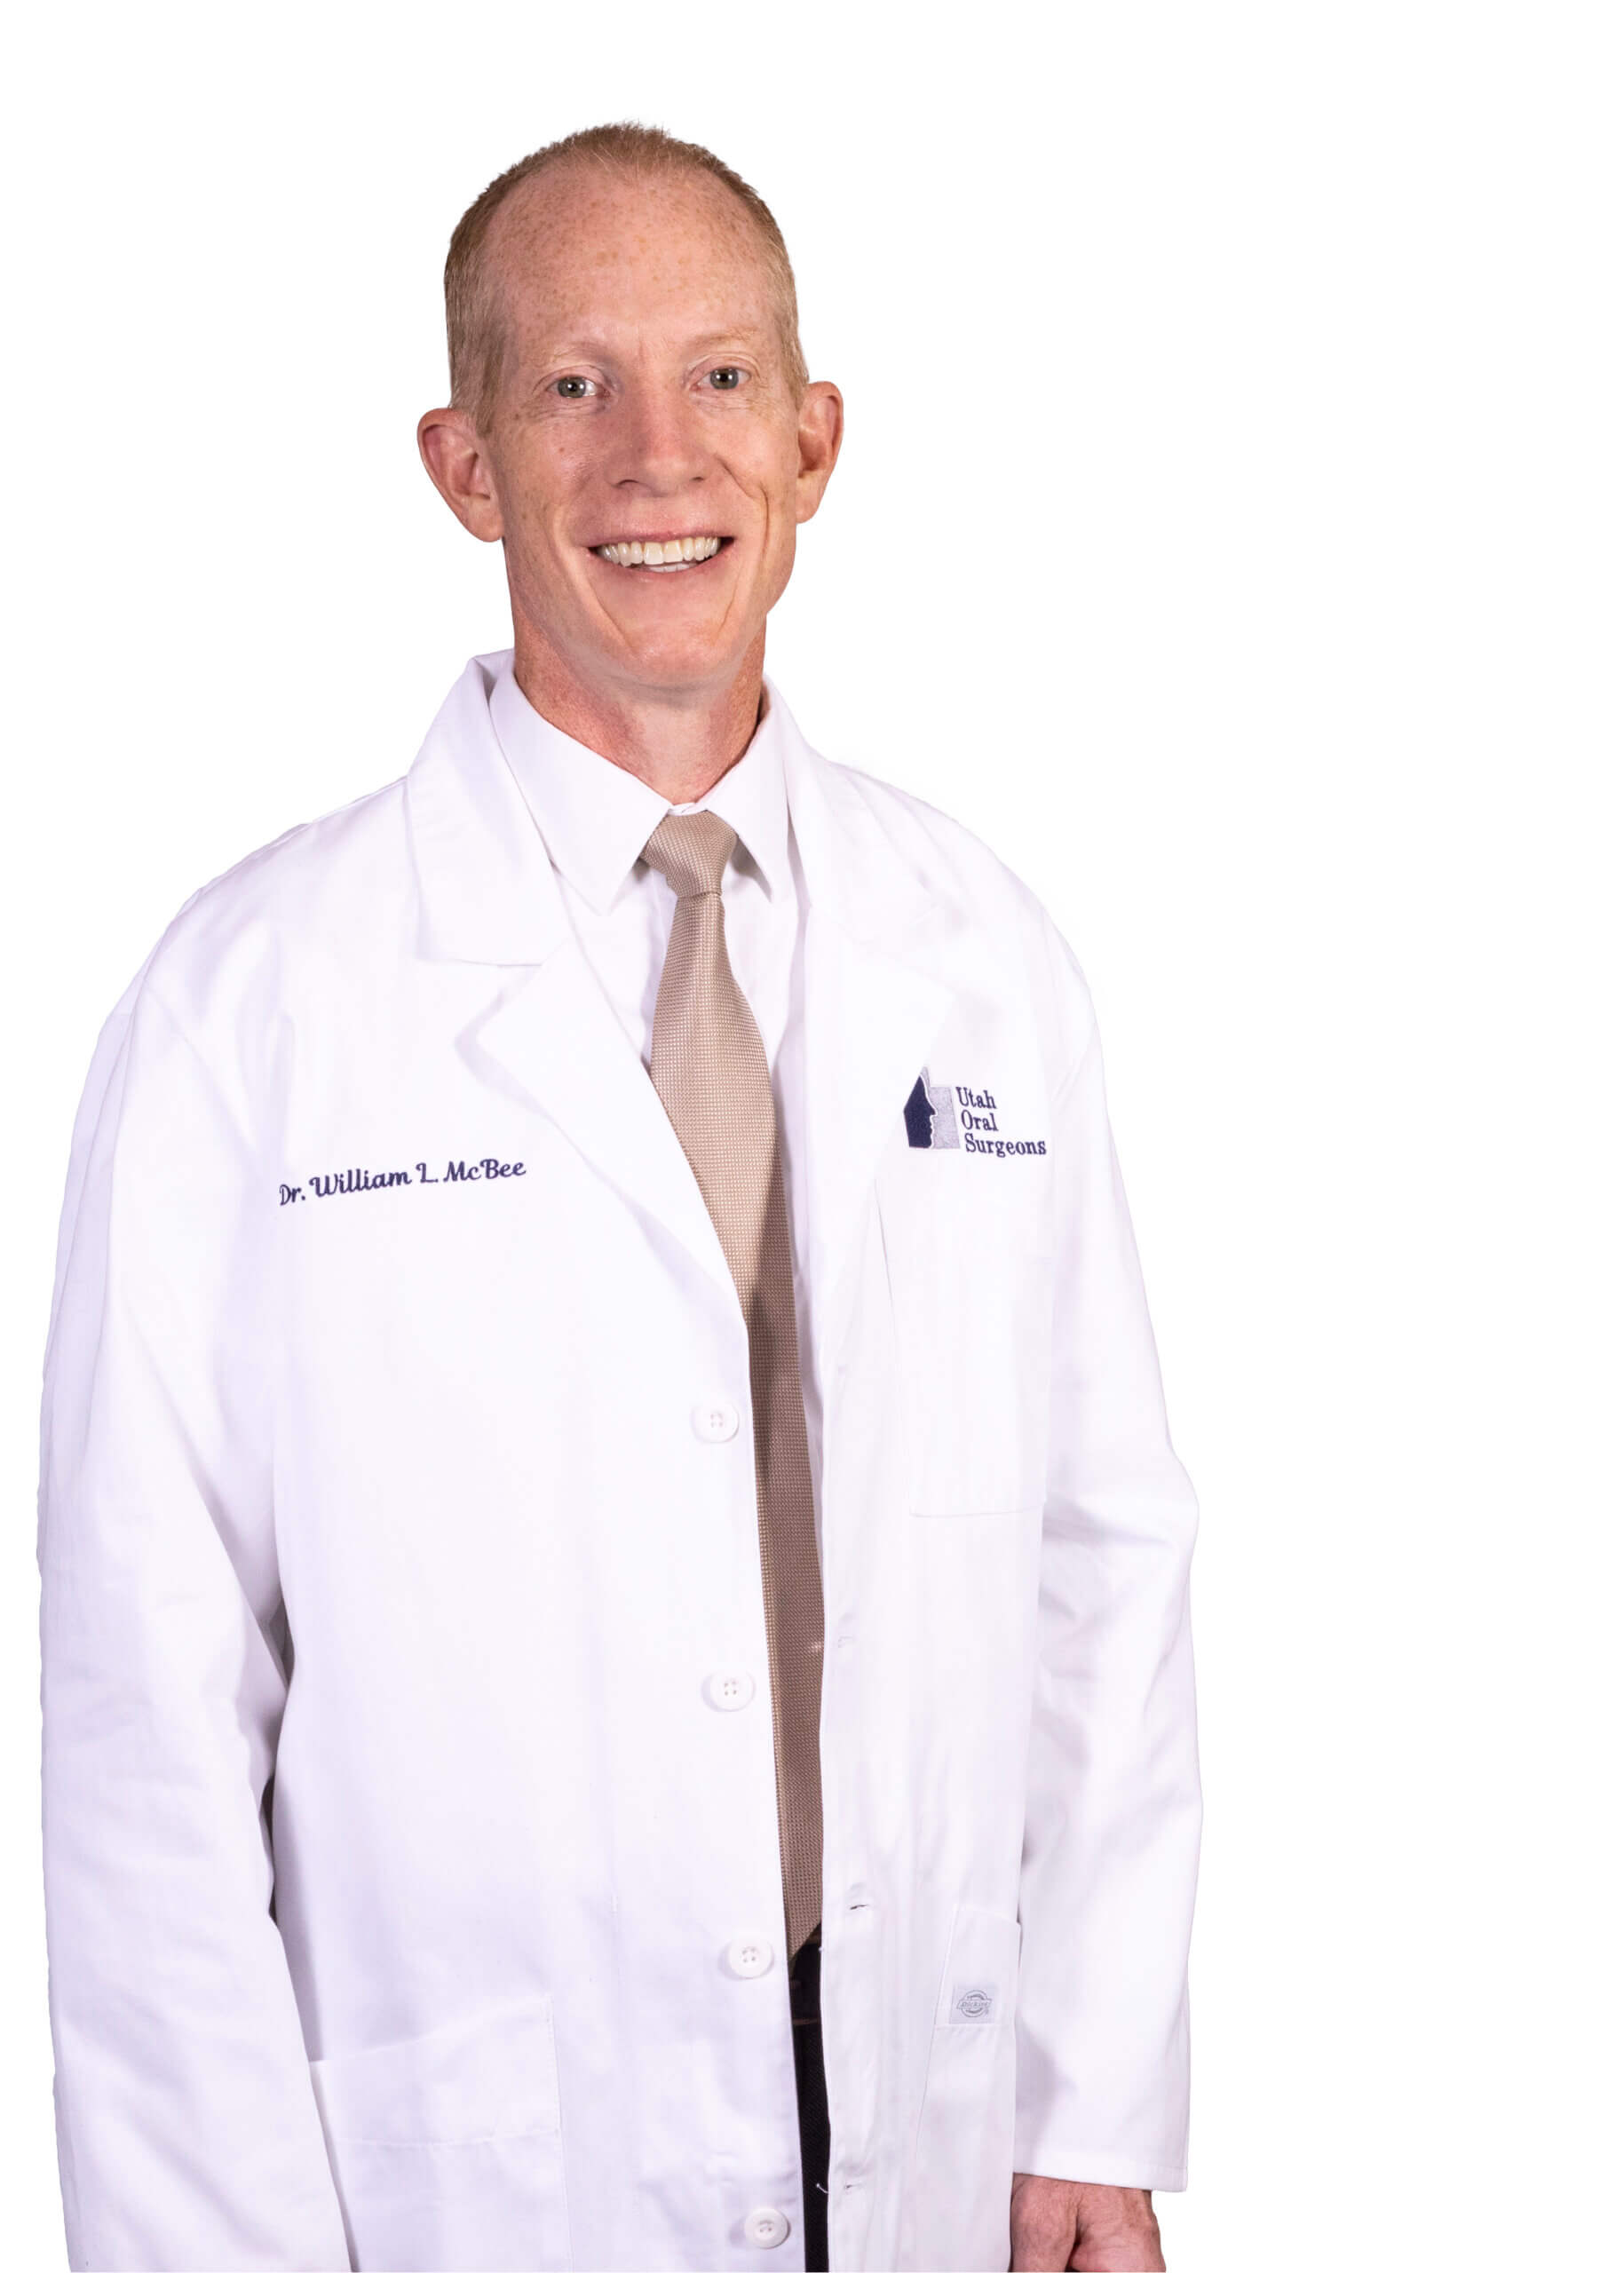 Dr. McBee - Utah Oral Surgeons in lab coat